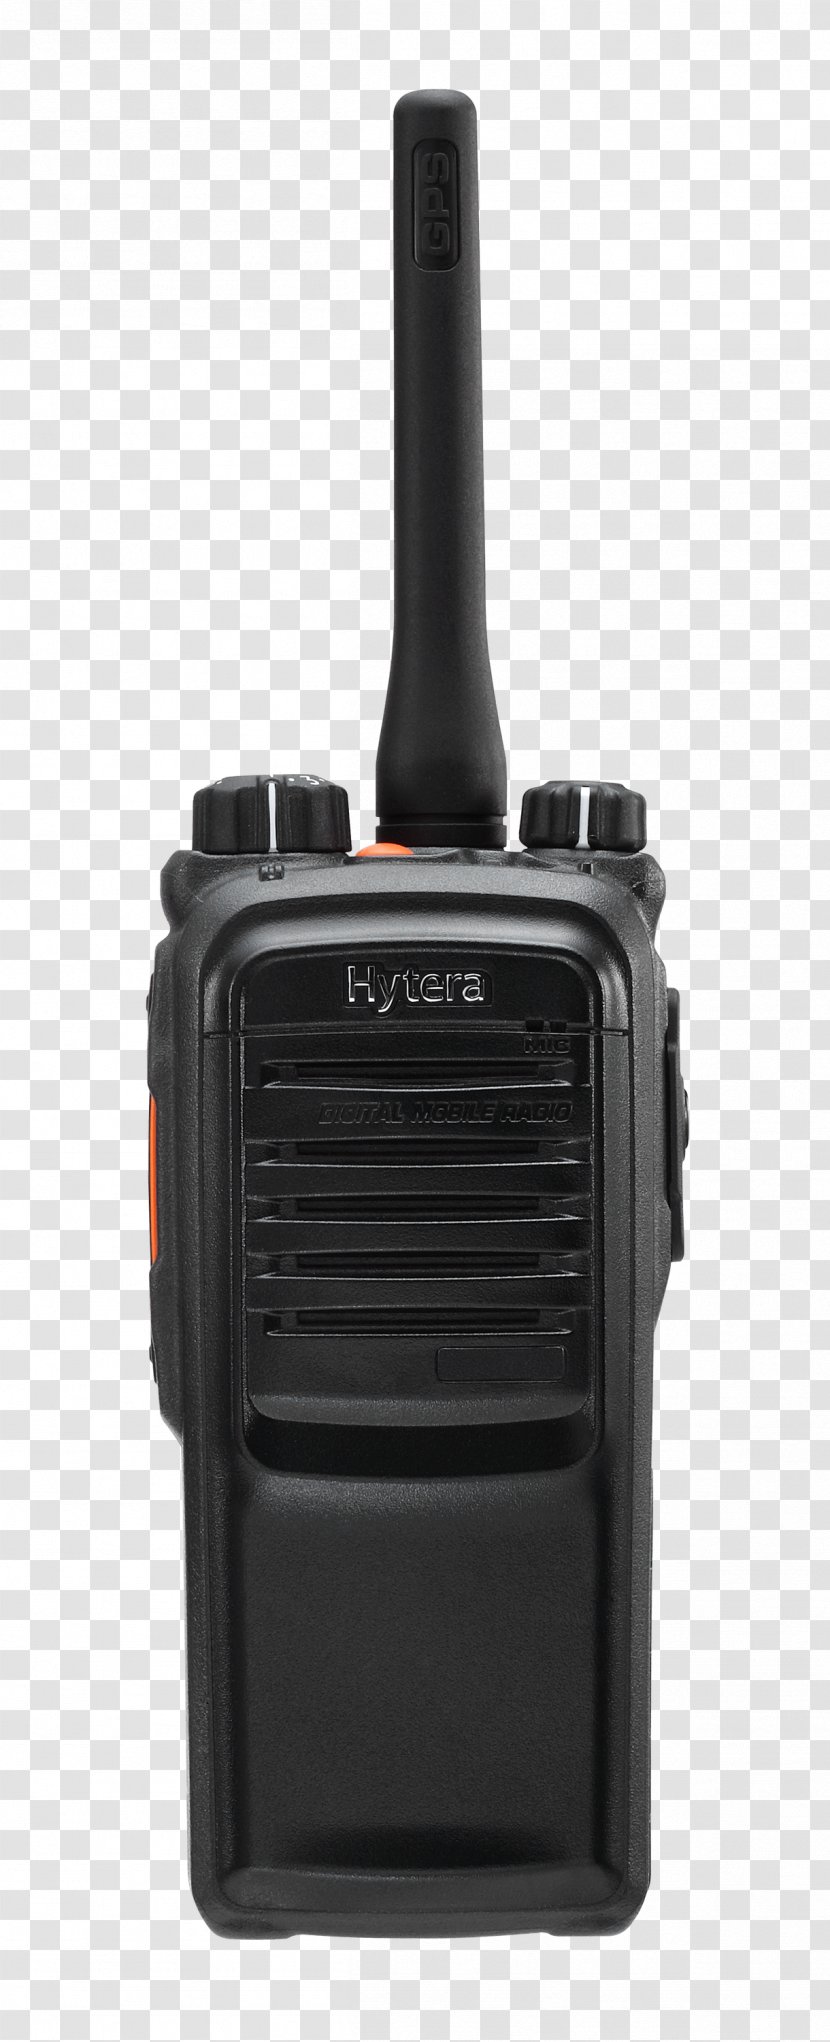 Handheld Two-Way Radios Hytera Digital Mobile Radio Station - Telecommunications Transparent PNG